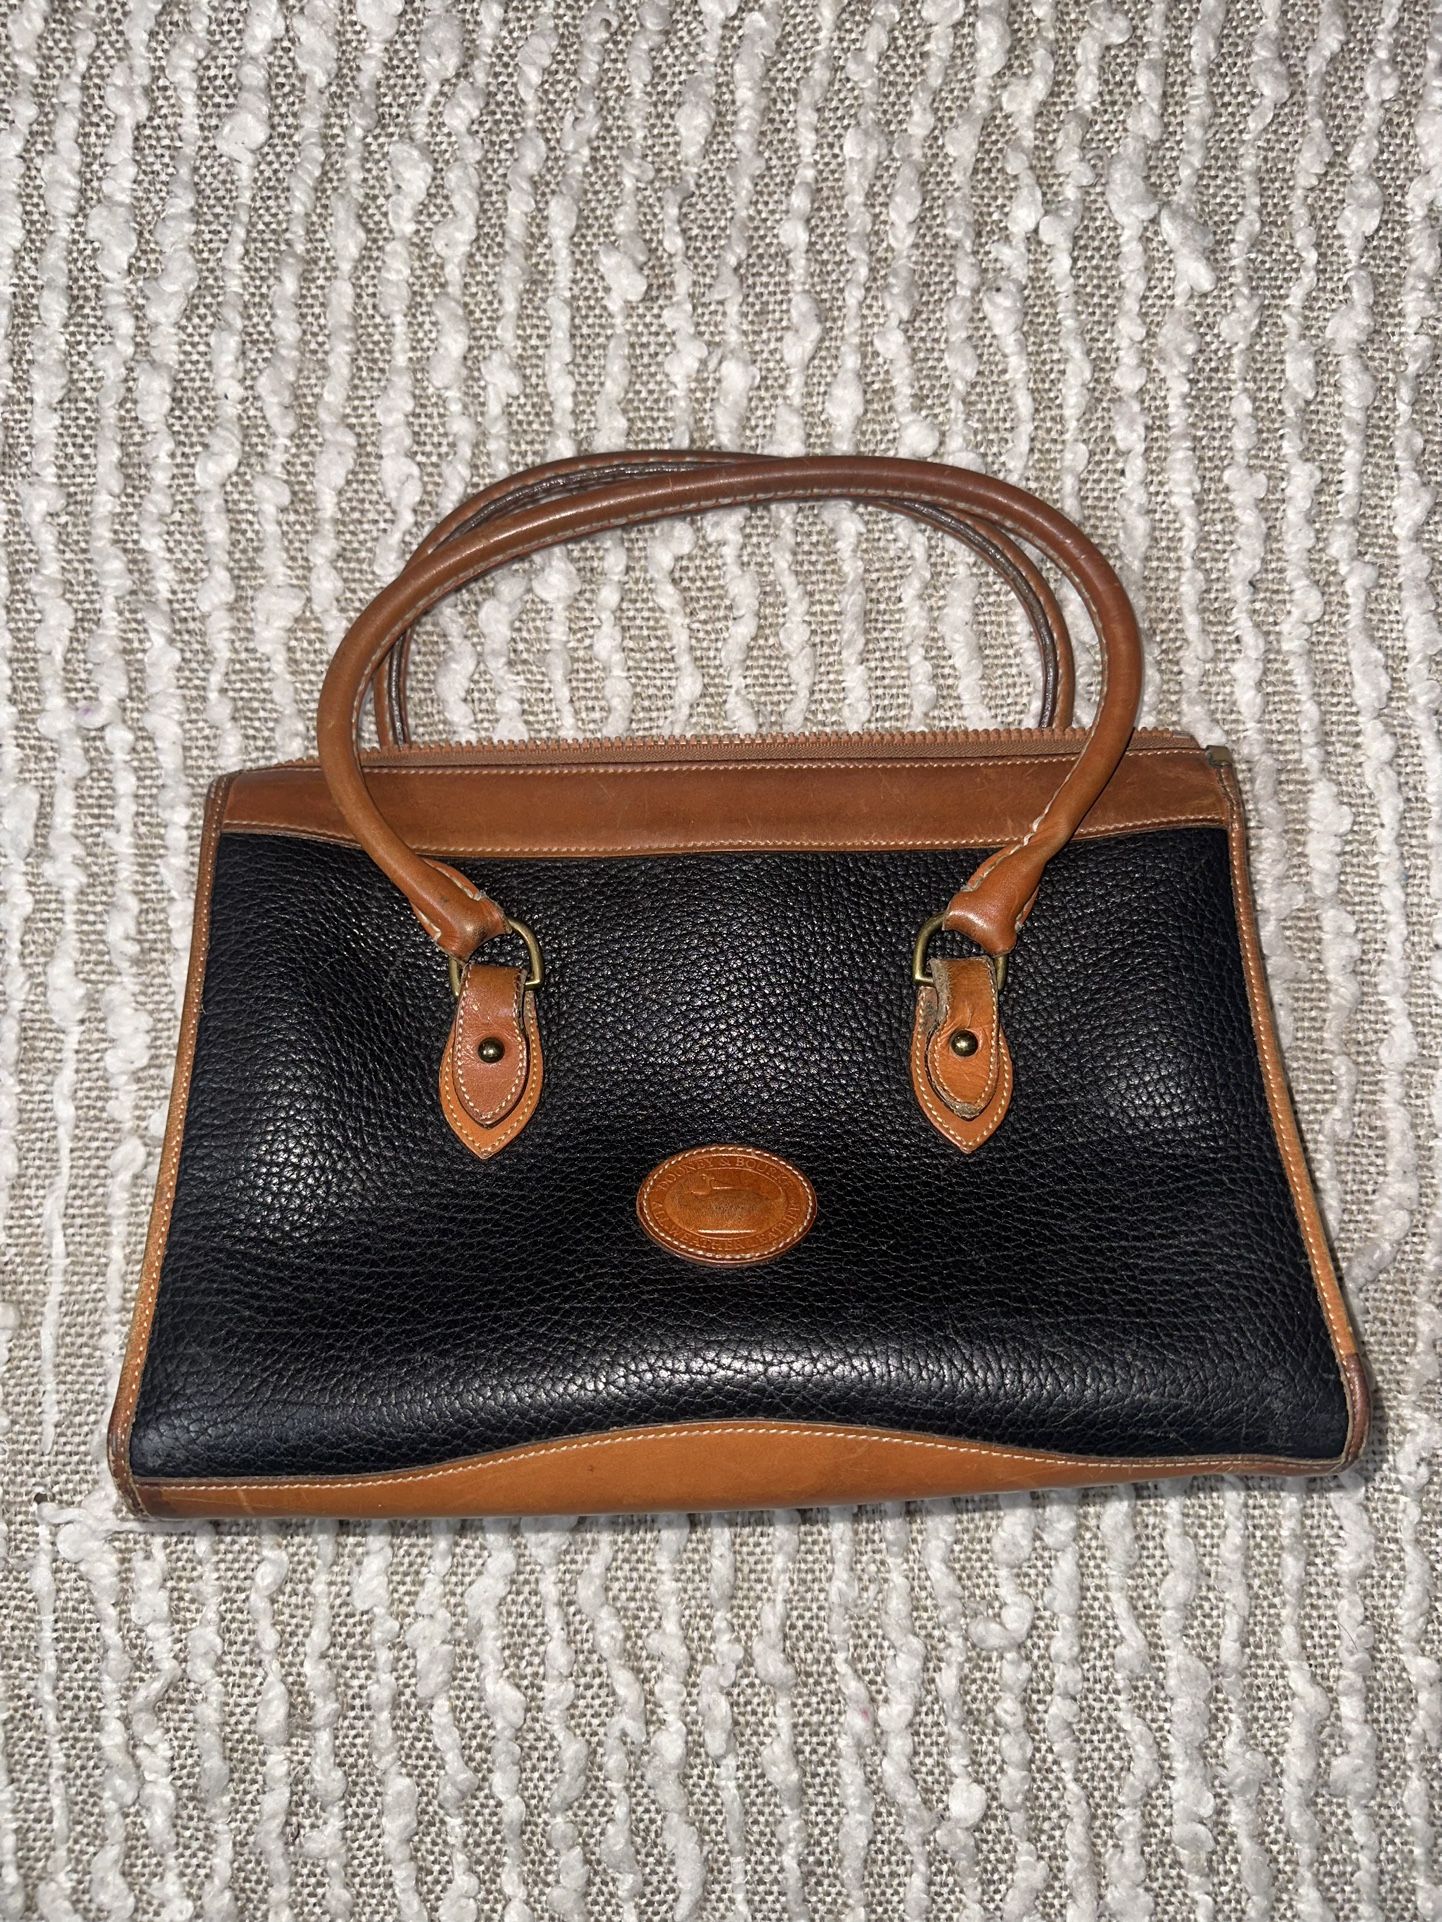 Dooney & Bourke Vintage Black/Tan Satchel Handbag Size 12x9x4